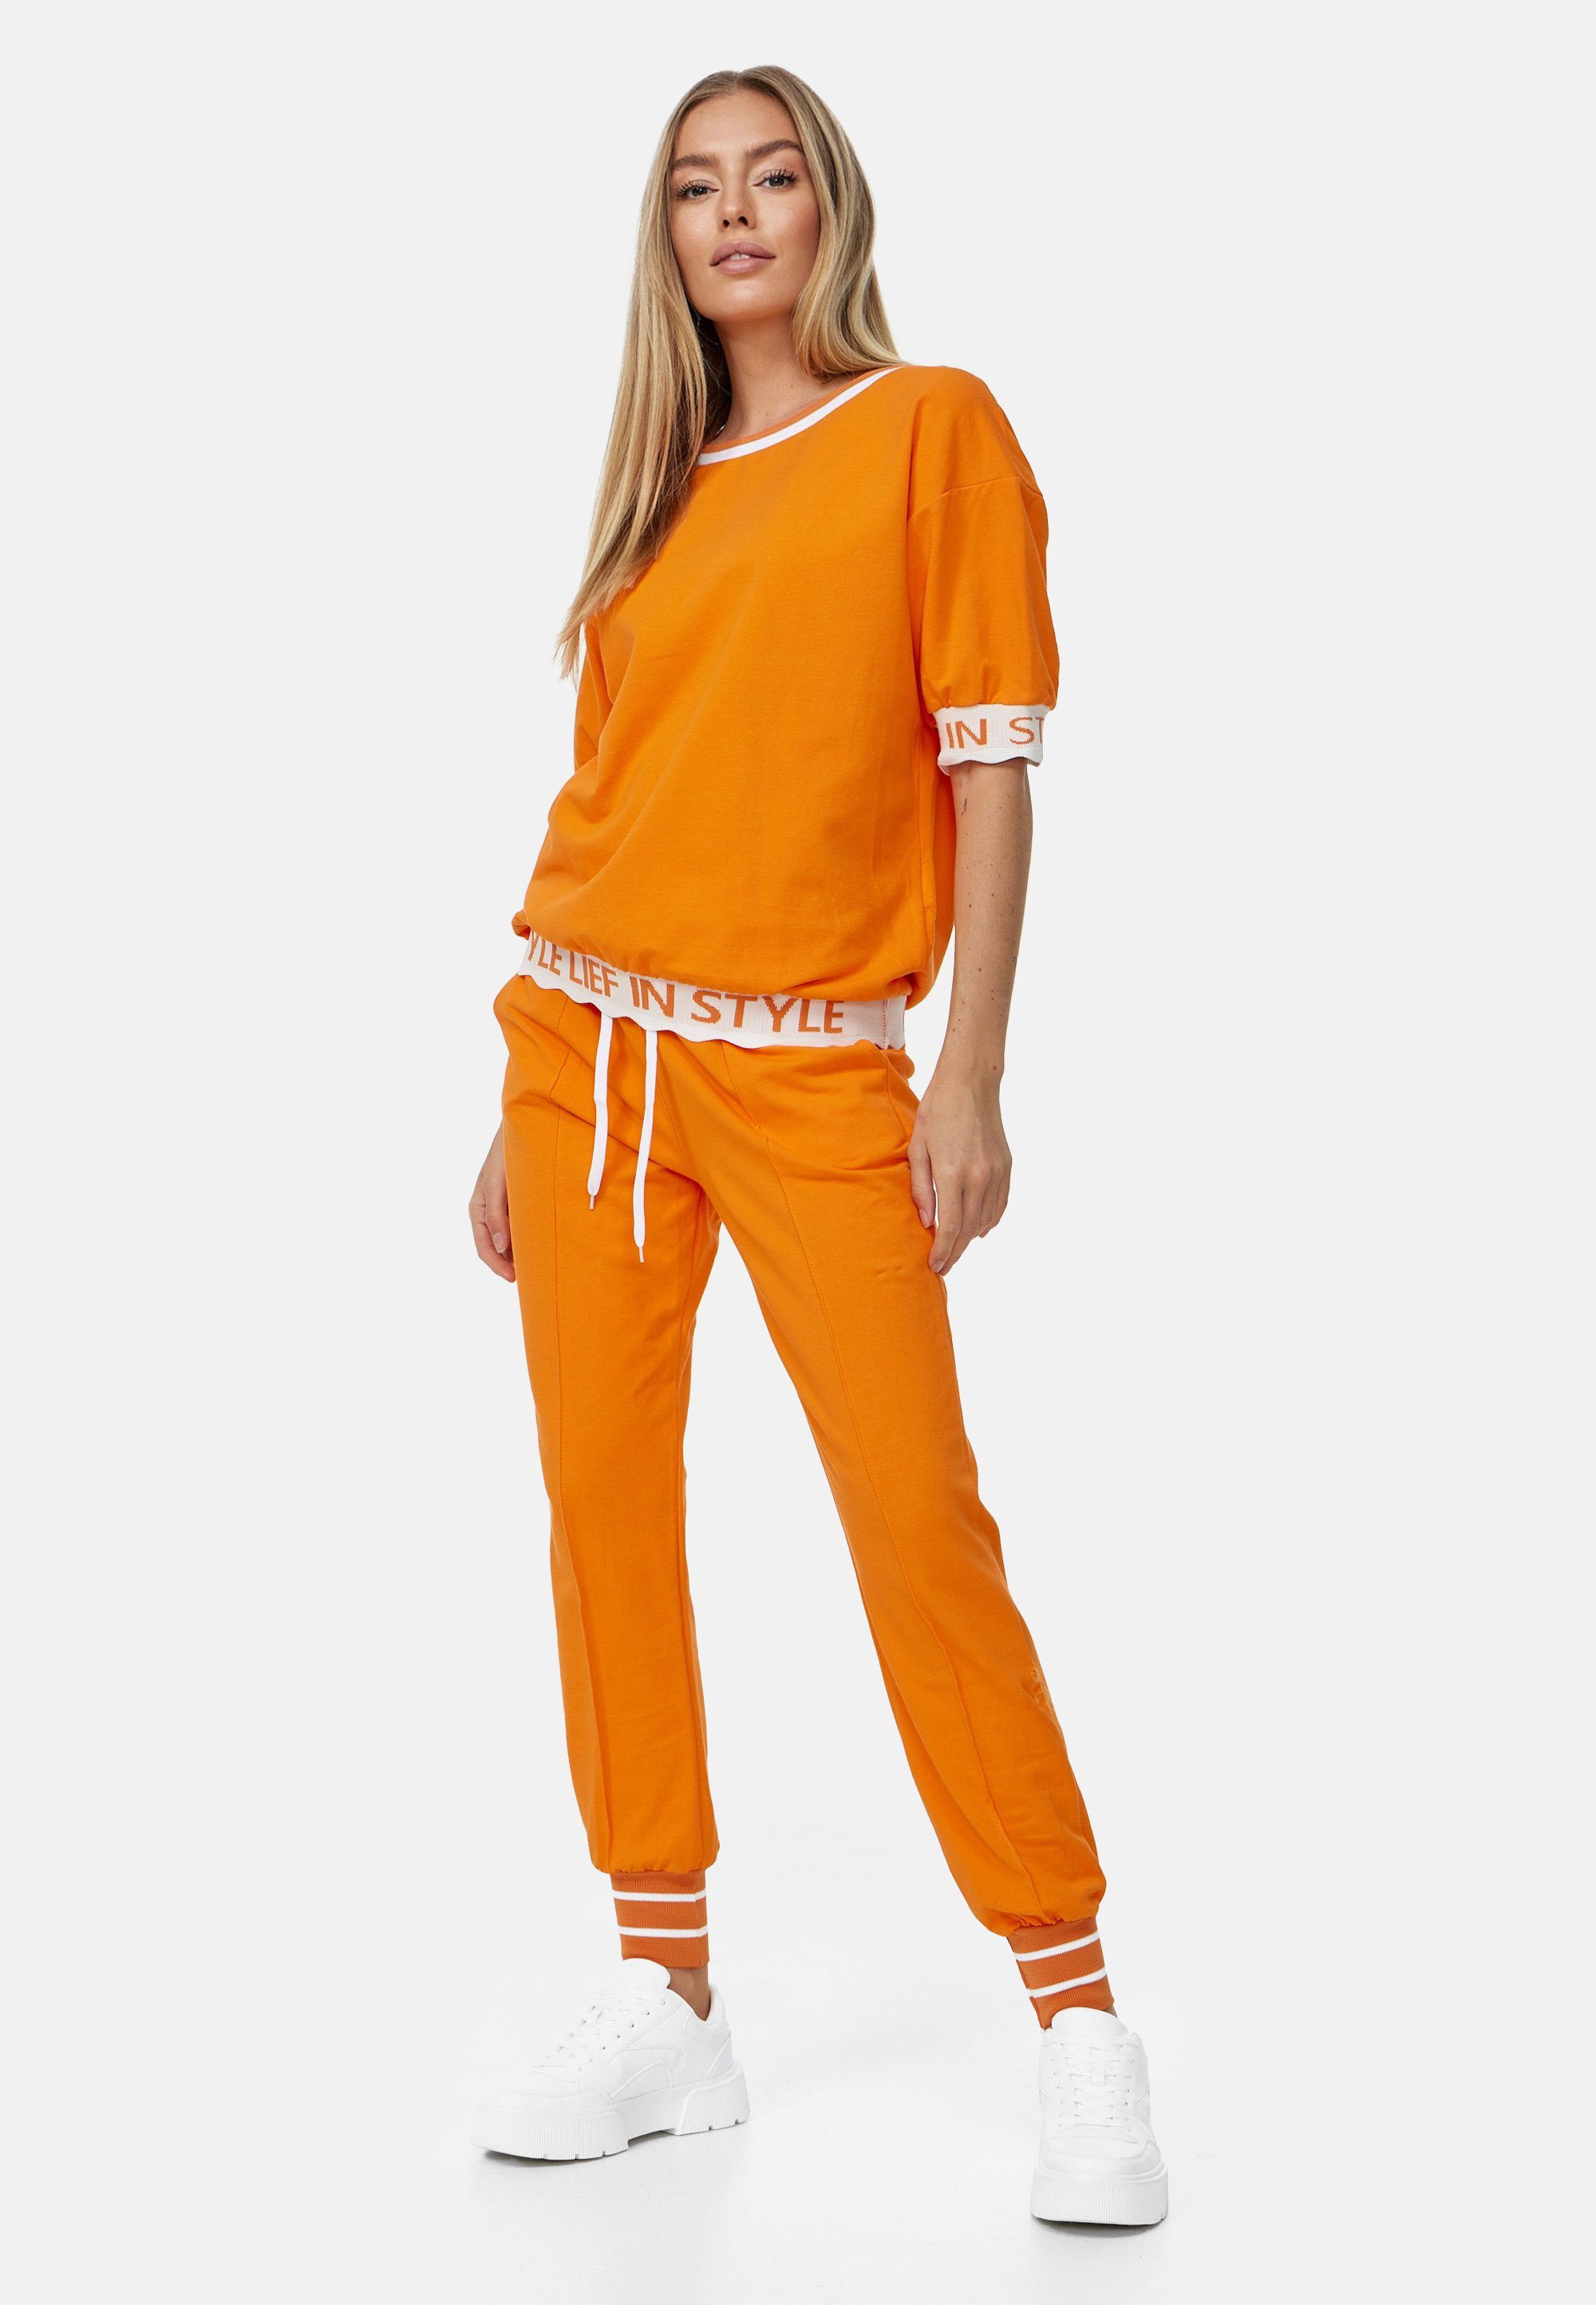 Decay Schriftzug orange stylishem mit T-Shirt